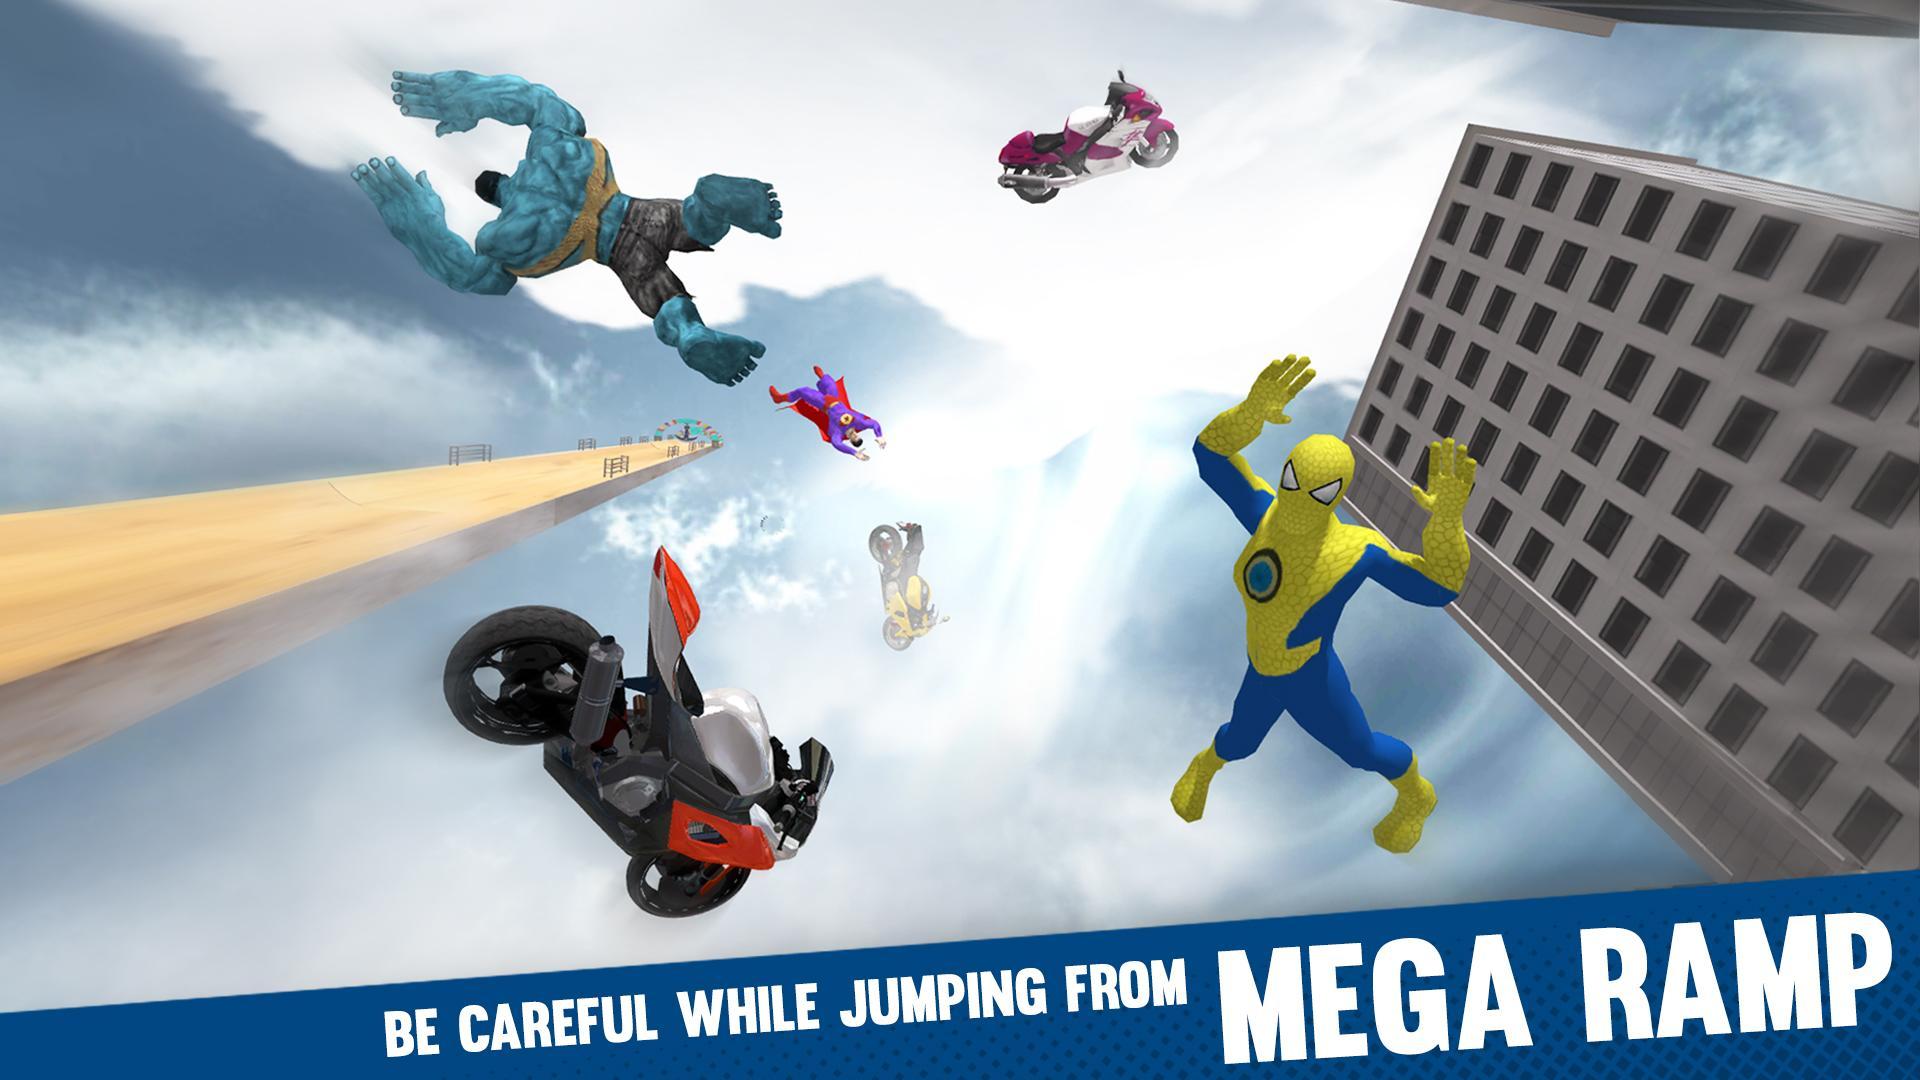 Super Hero Bike Mega Ramp Stunt Racing Simulator For Android Apk Download - roblox mega challenge ad youtube heroes of the